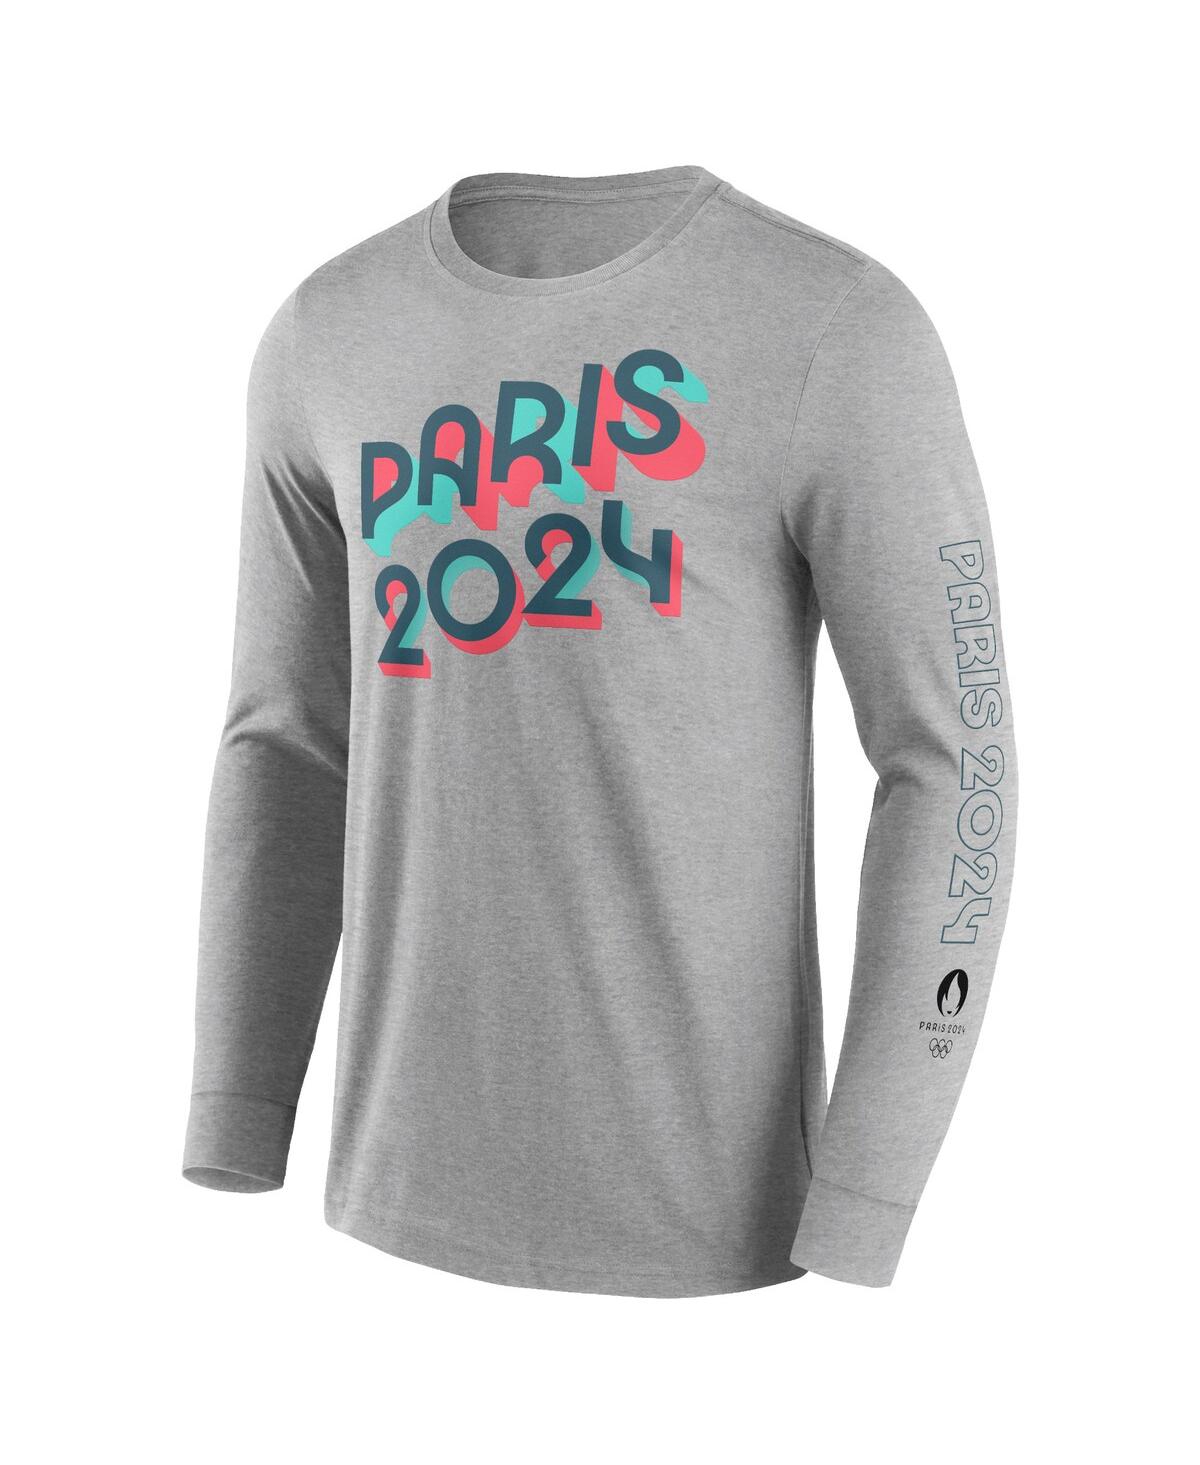 Shop Fanatics Branded Men's Heather Gray Paris 2024 Bold Stripe Long Sleeve T-shirt